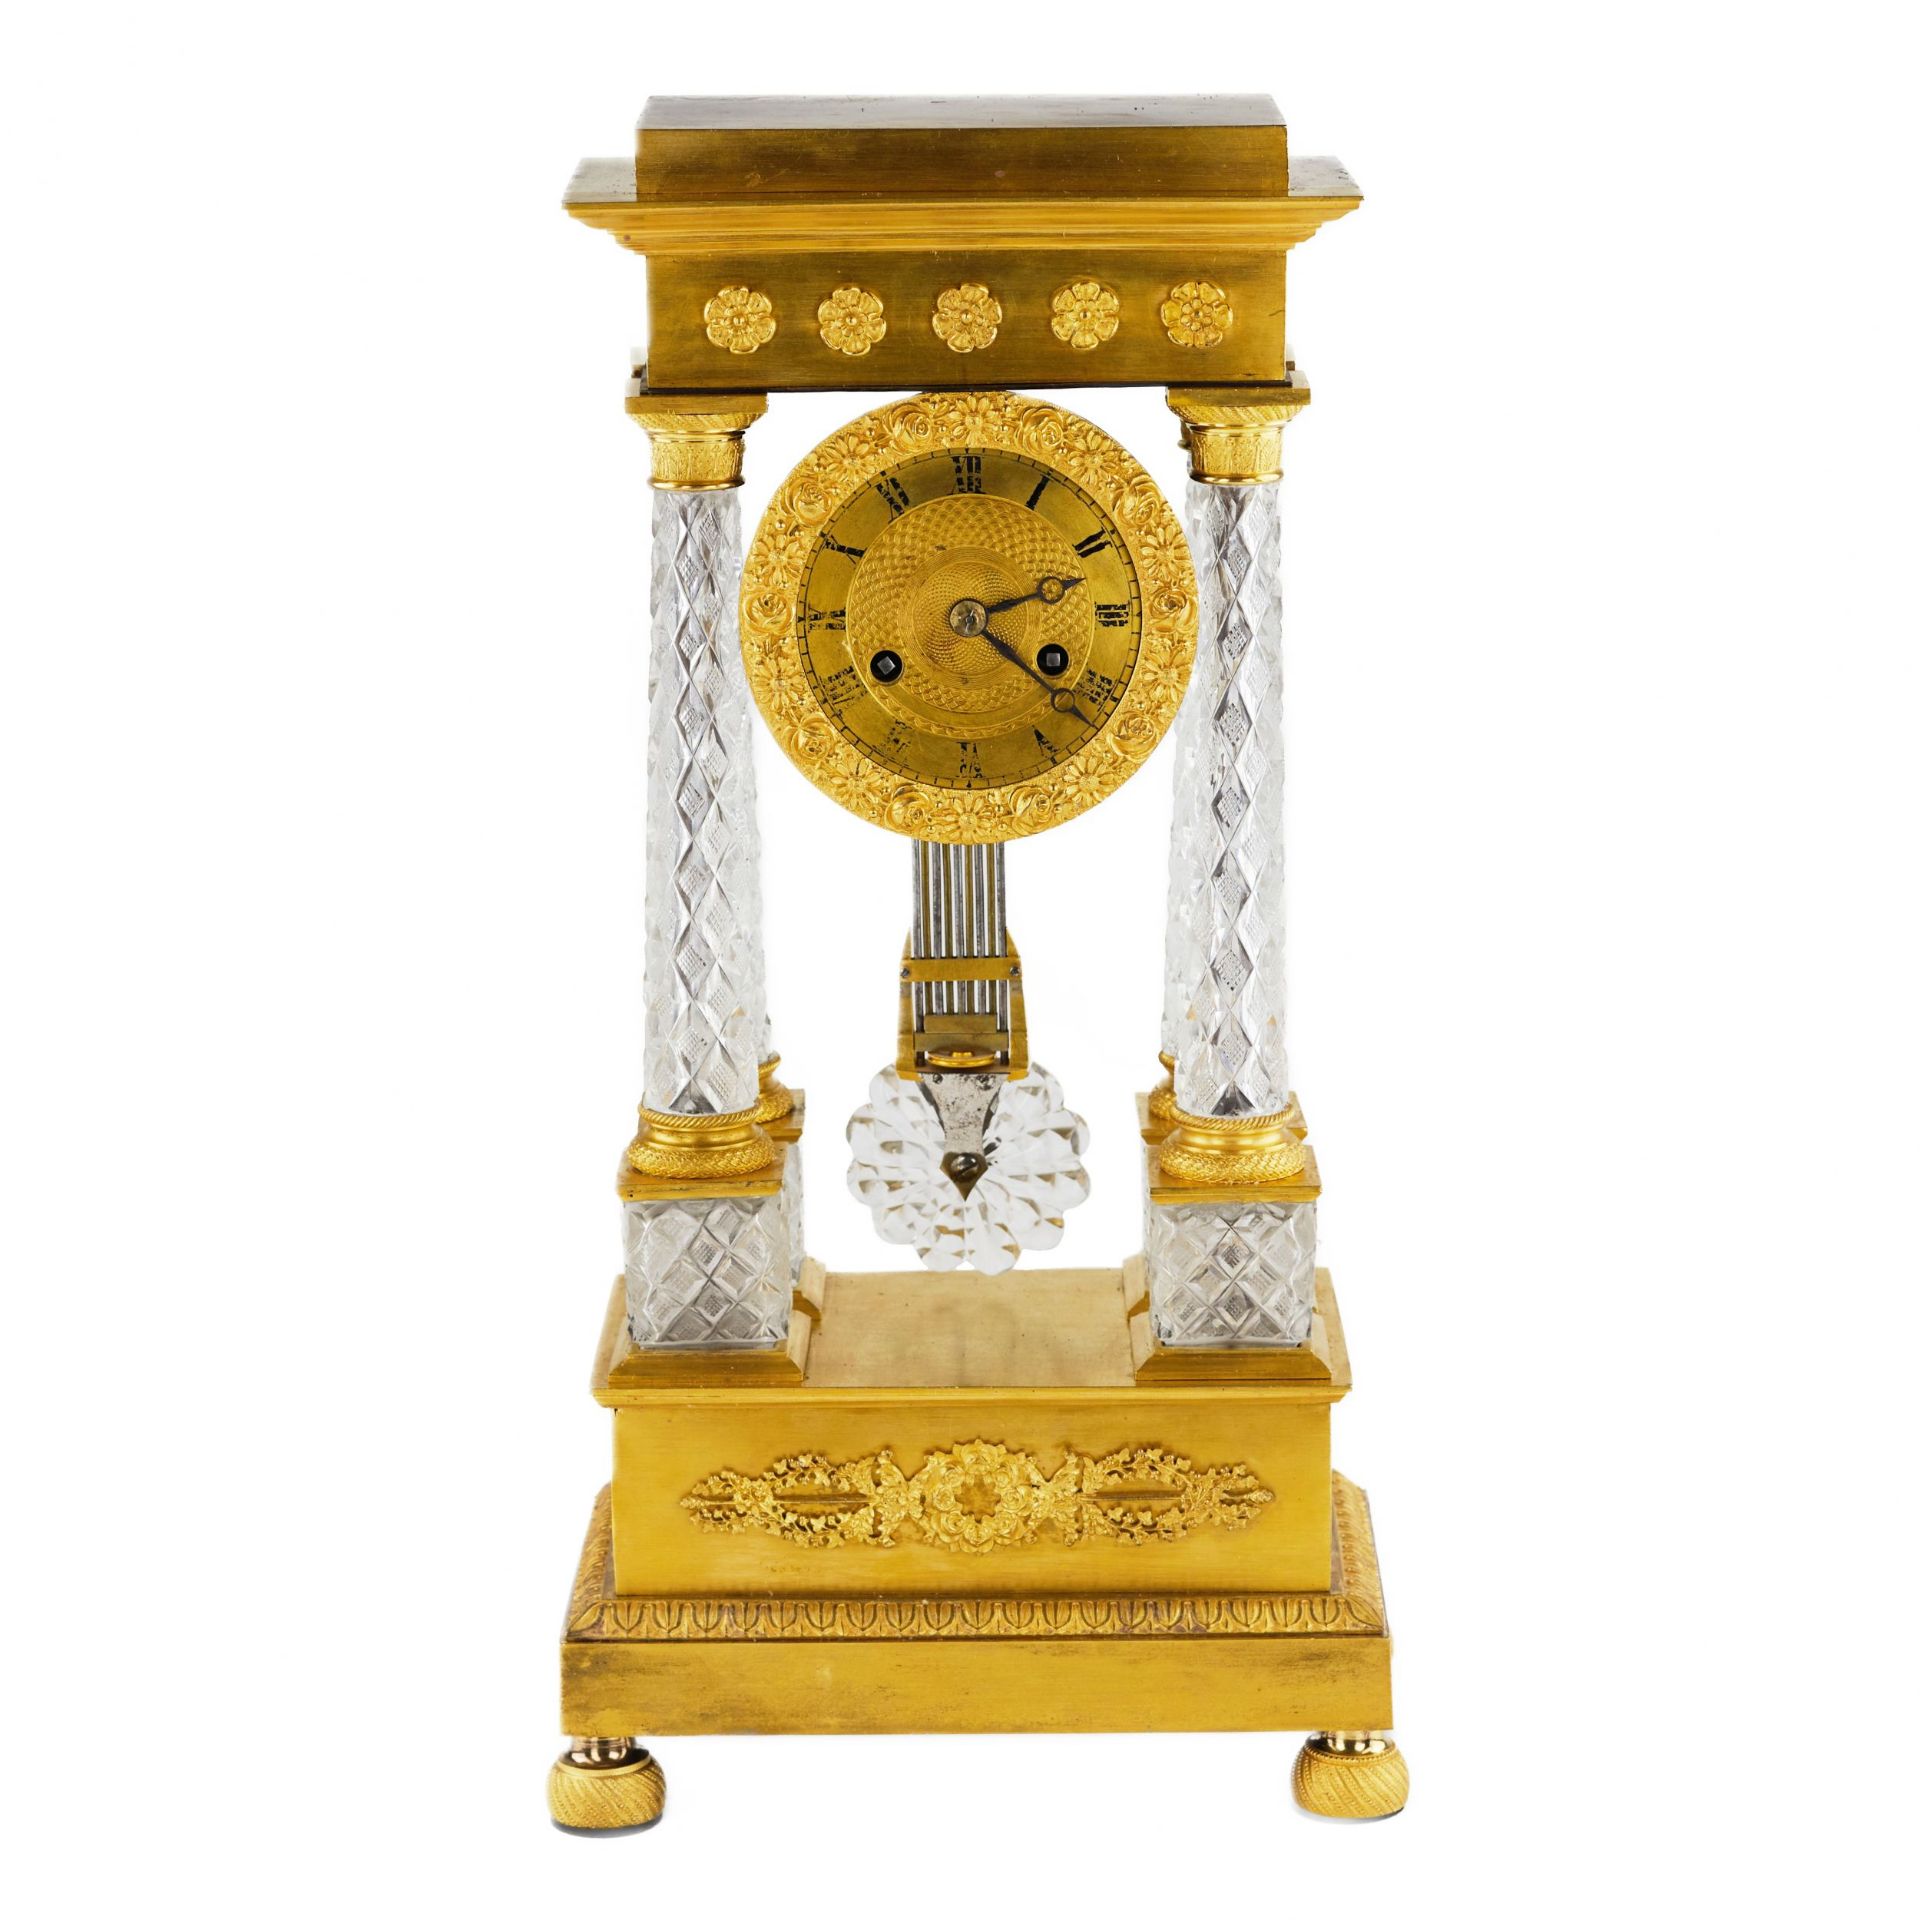 Empire style mantel clock. Paris .1830. - Image 2 of 6